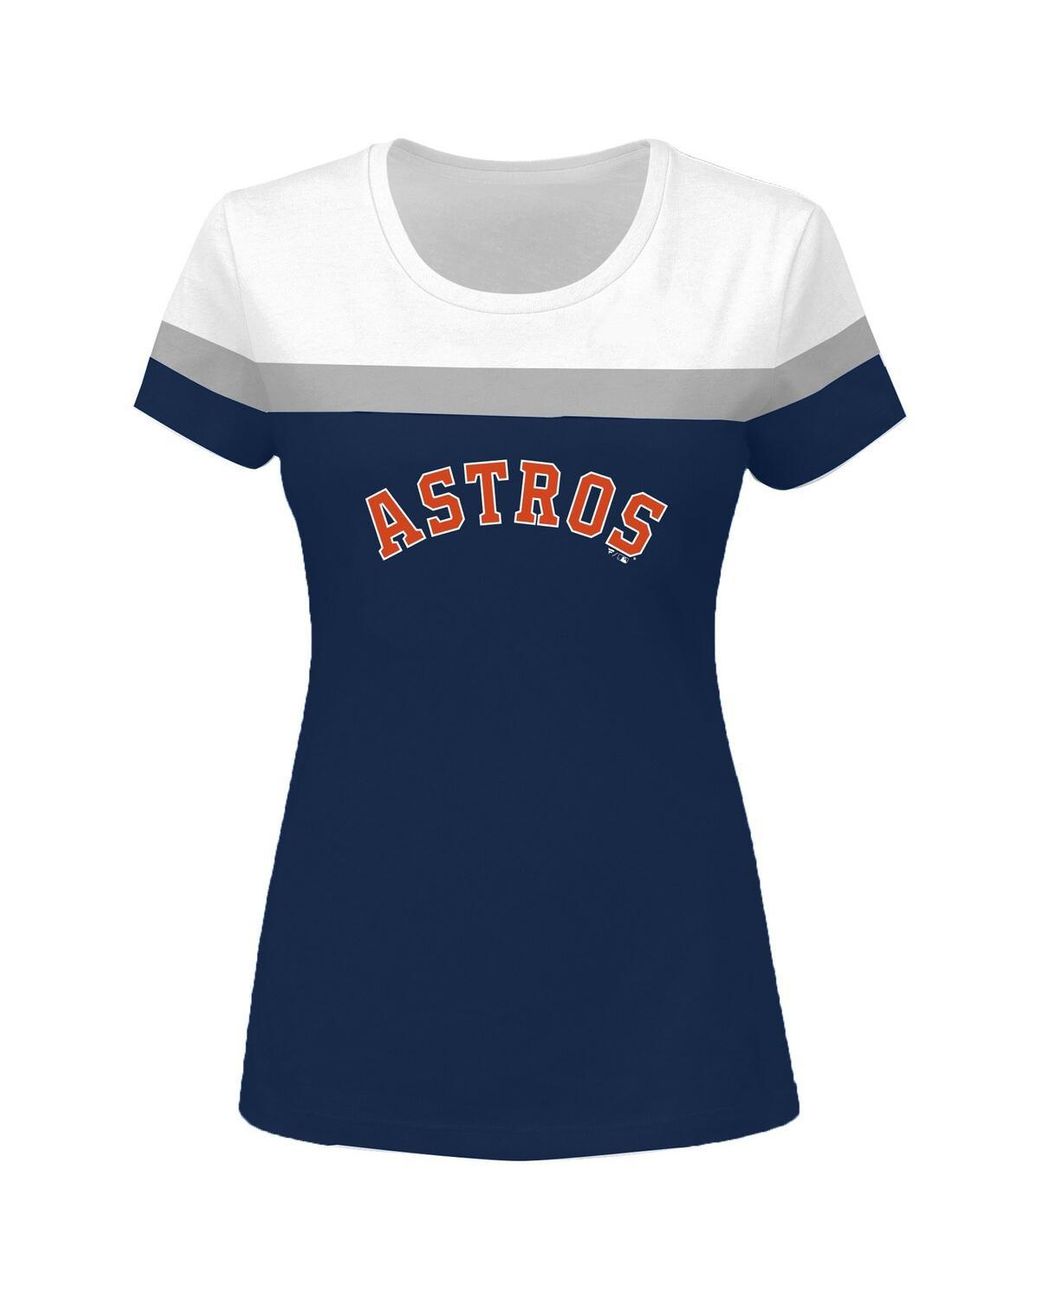 astros tee shirts